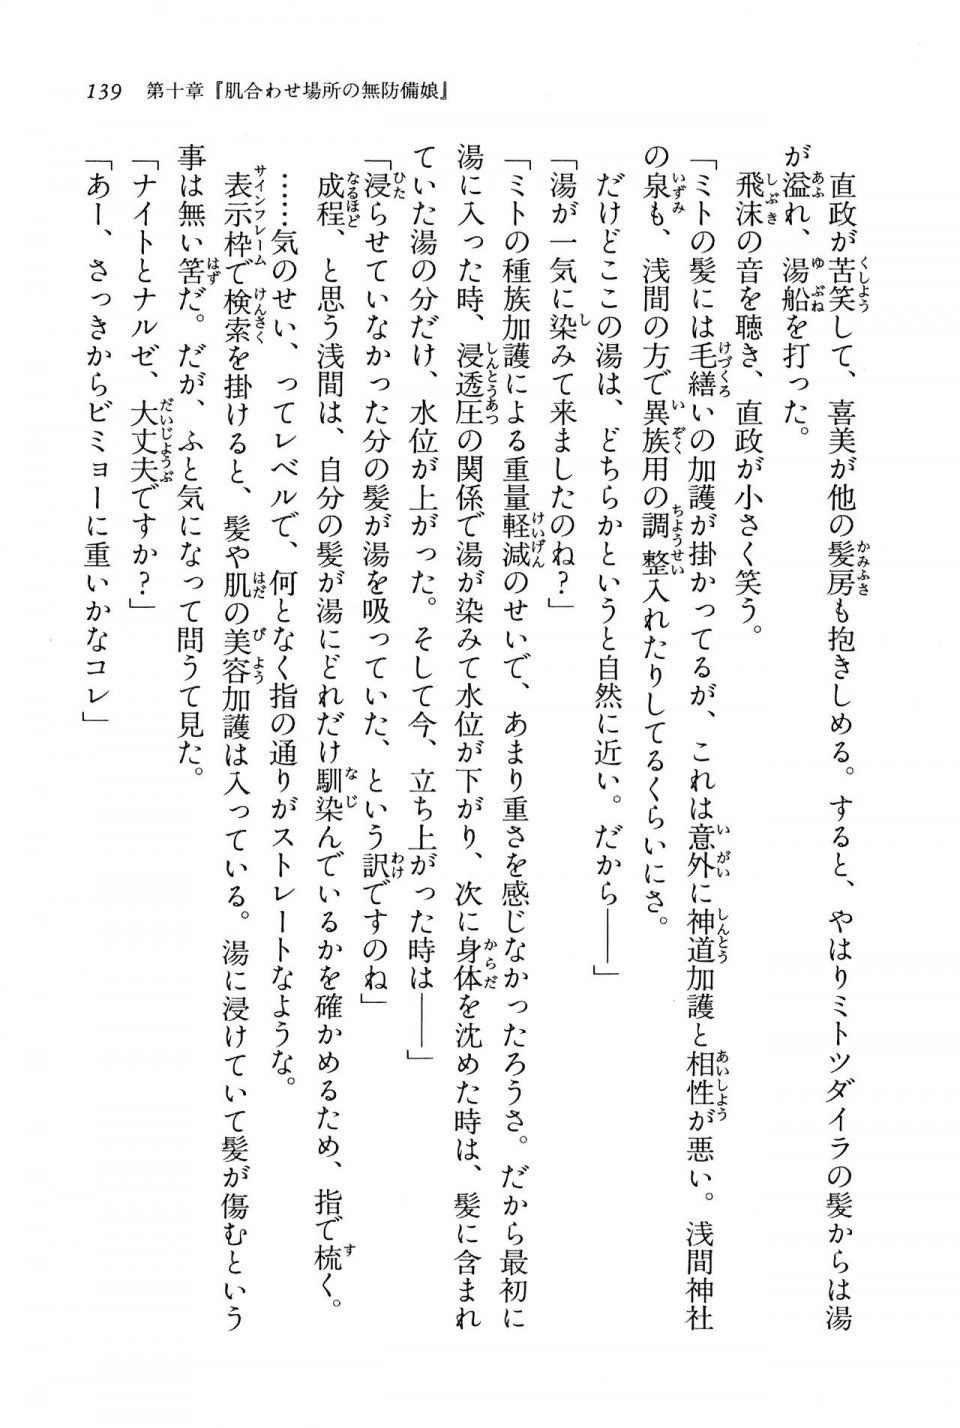 Kyoukai Senjou no Horizon BD Special Mininovel Vol 8(4B) - Photo #143